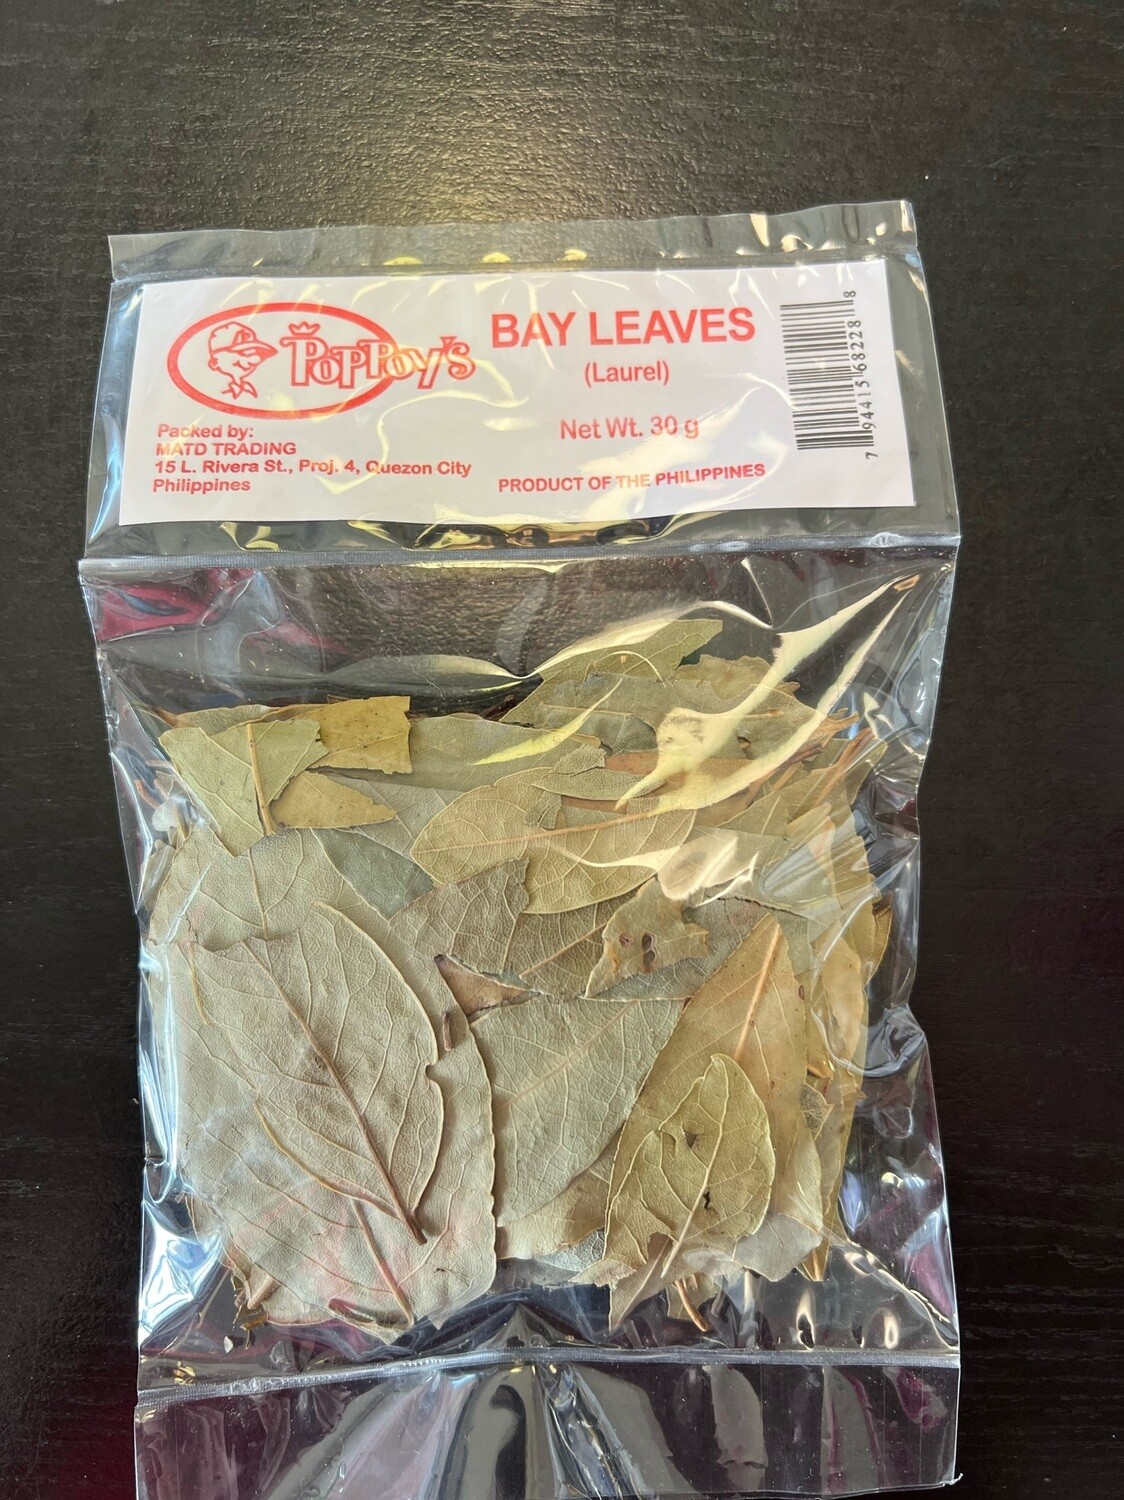 Poppy's Bay Leaves